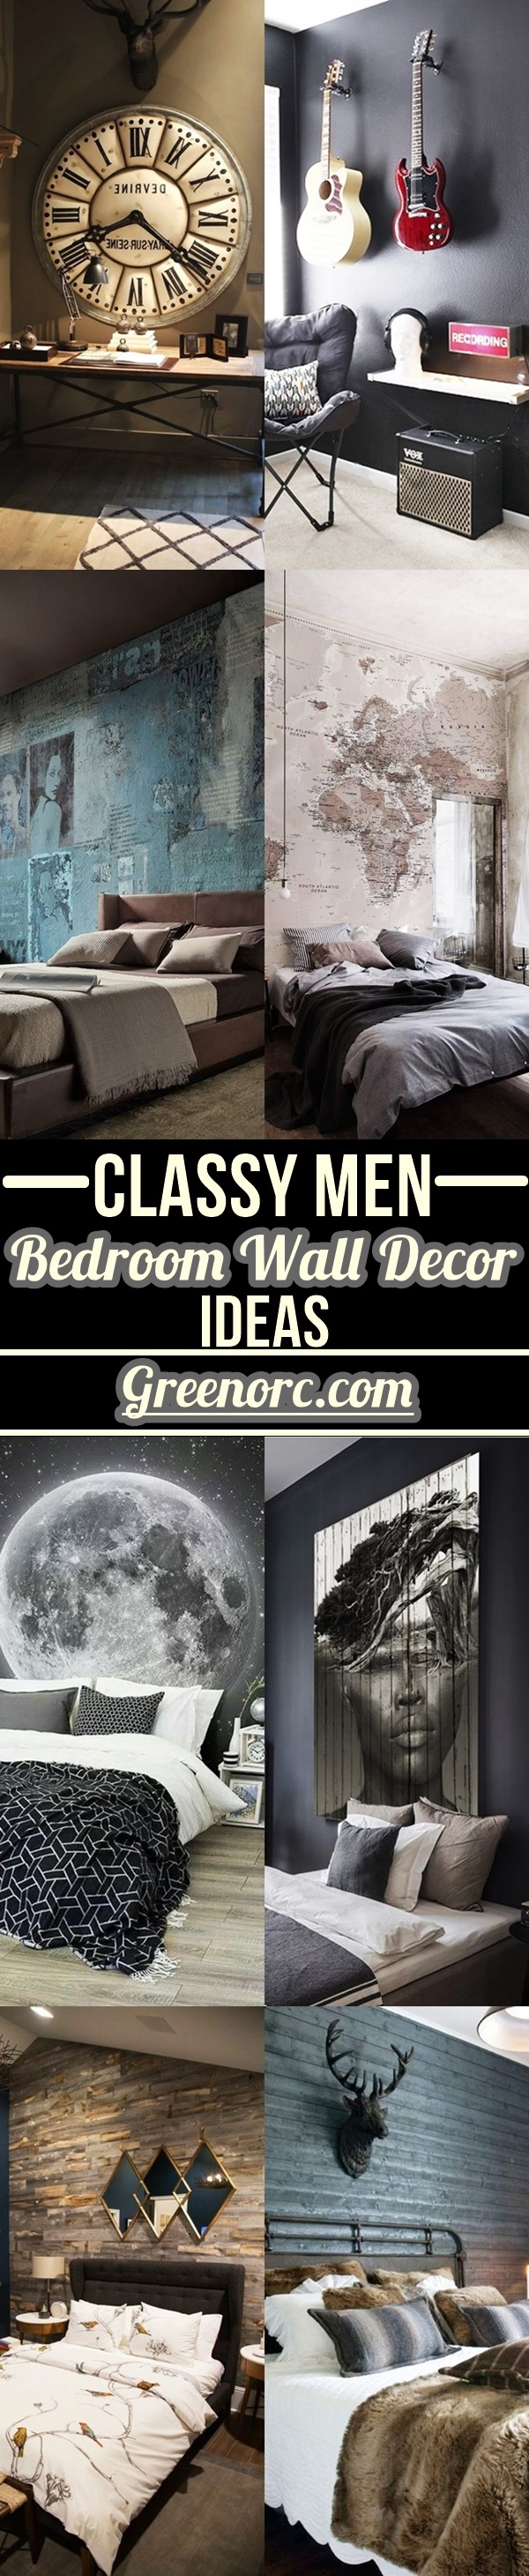 Classy Men Bedroom Wall Decor Ideas